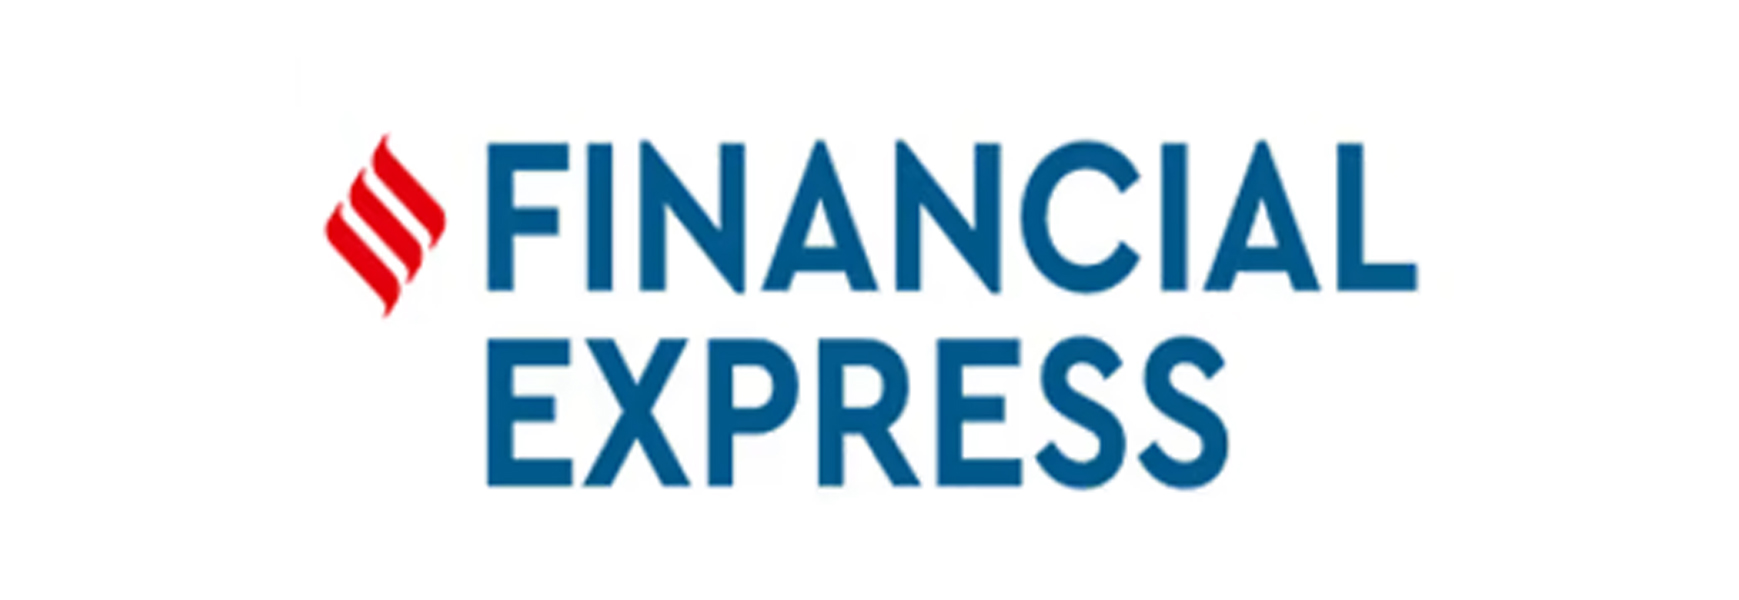 Financial Express (India) on LinkedIn: #febanknxt #futurebanking  #innovationunleashed